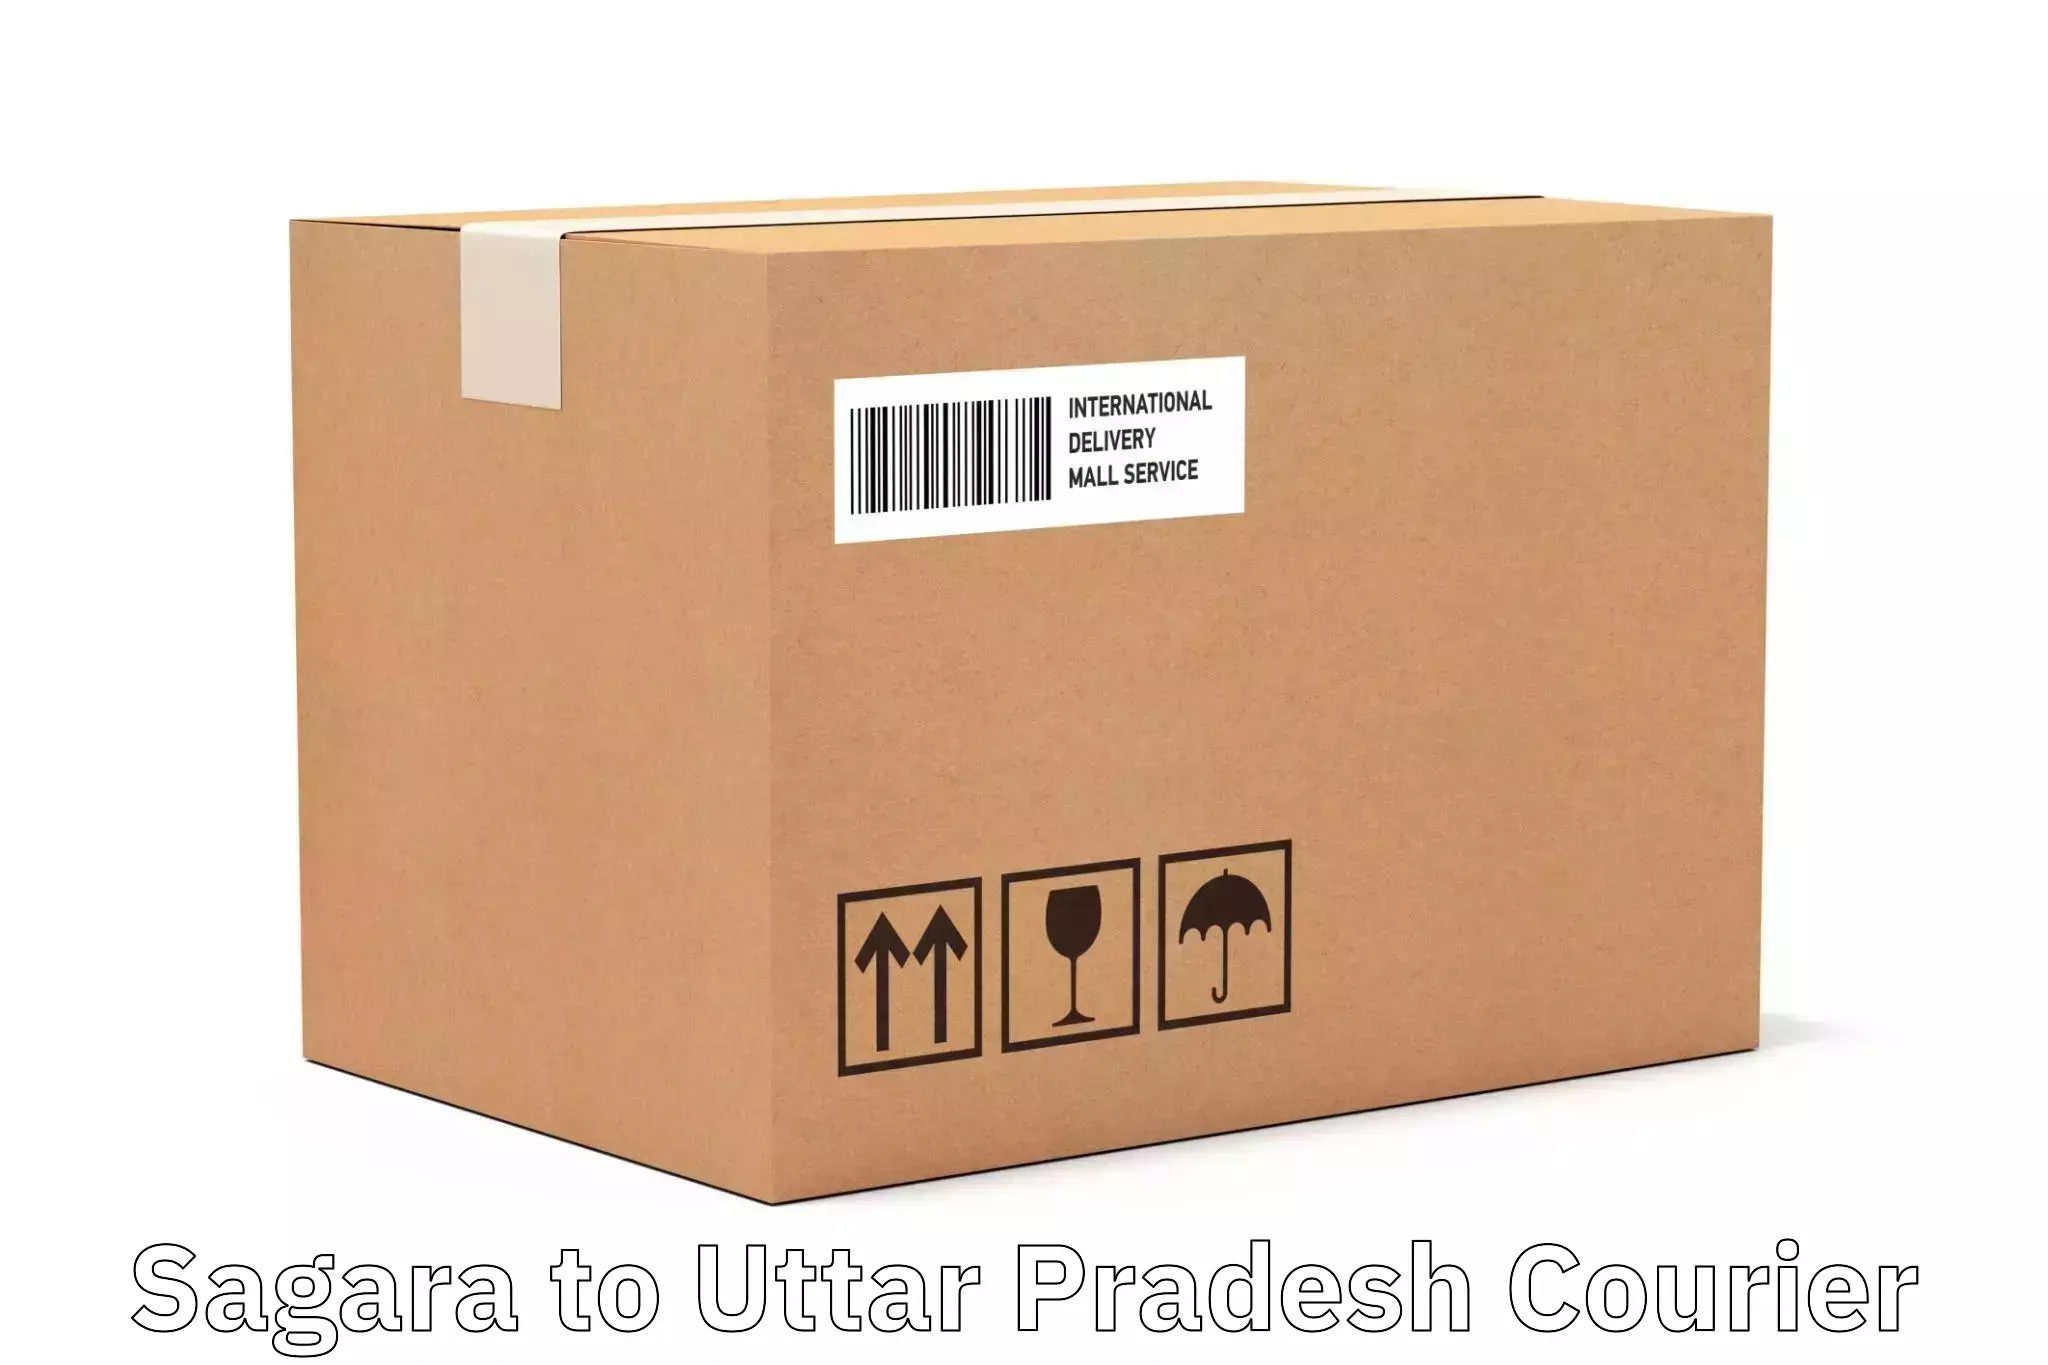 Global shipping networks Sagara to Uttar Pradesh